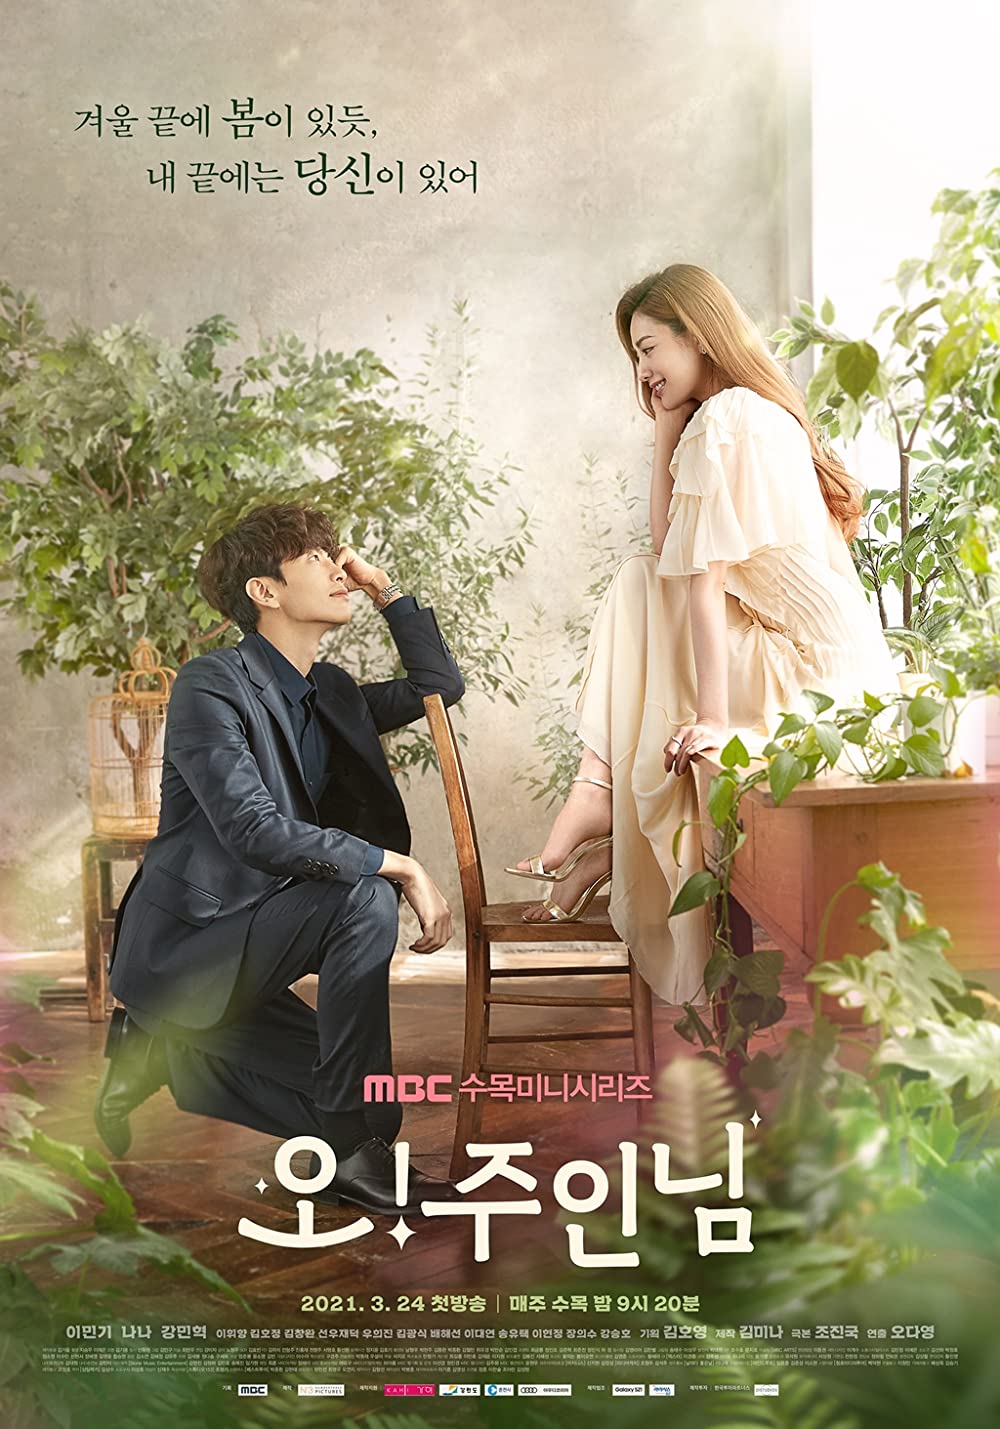 11 Daftar drama Korea romantis yang bikin baper, Snowdrop manis banget